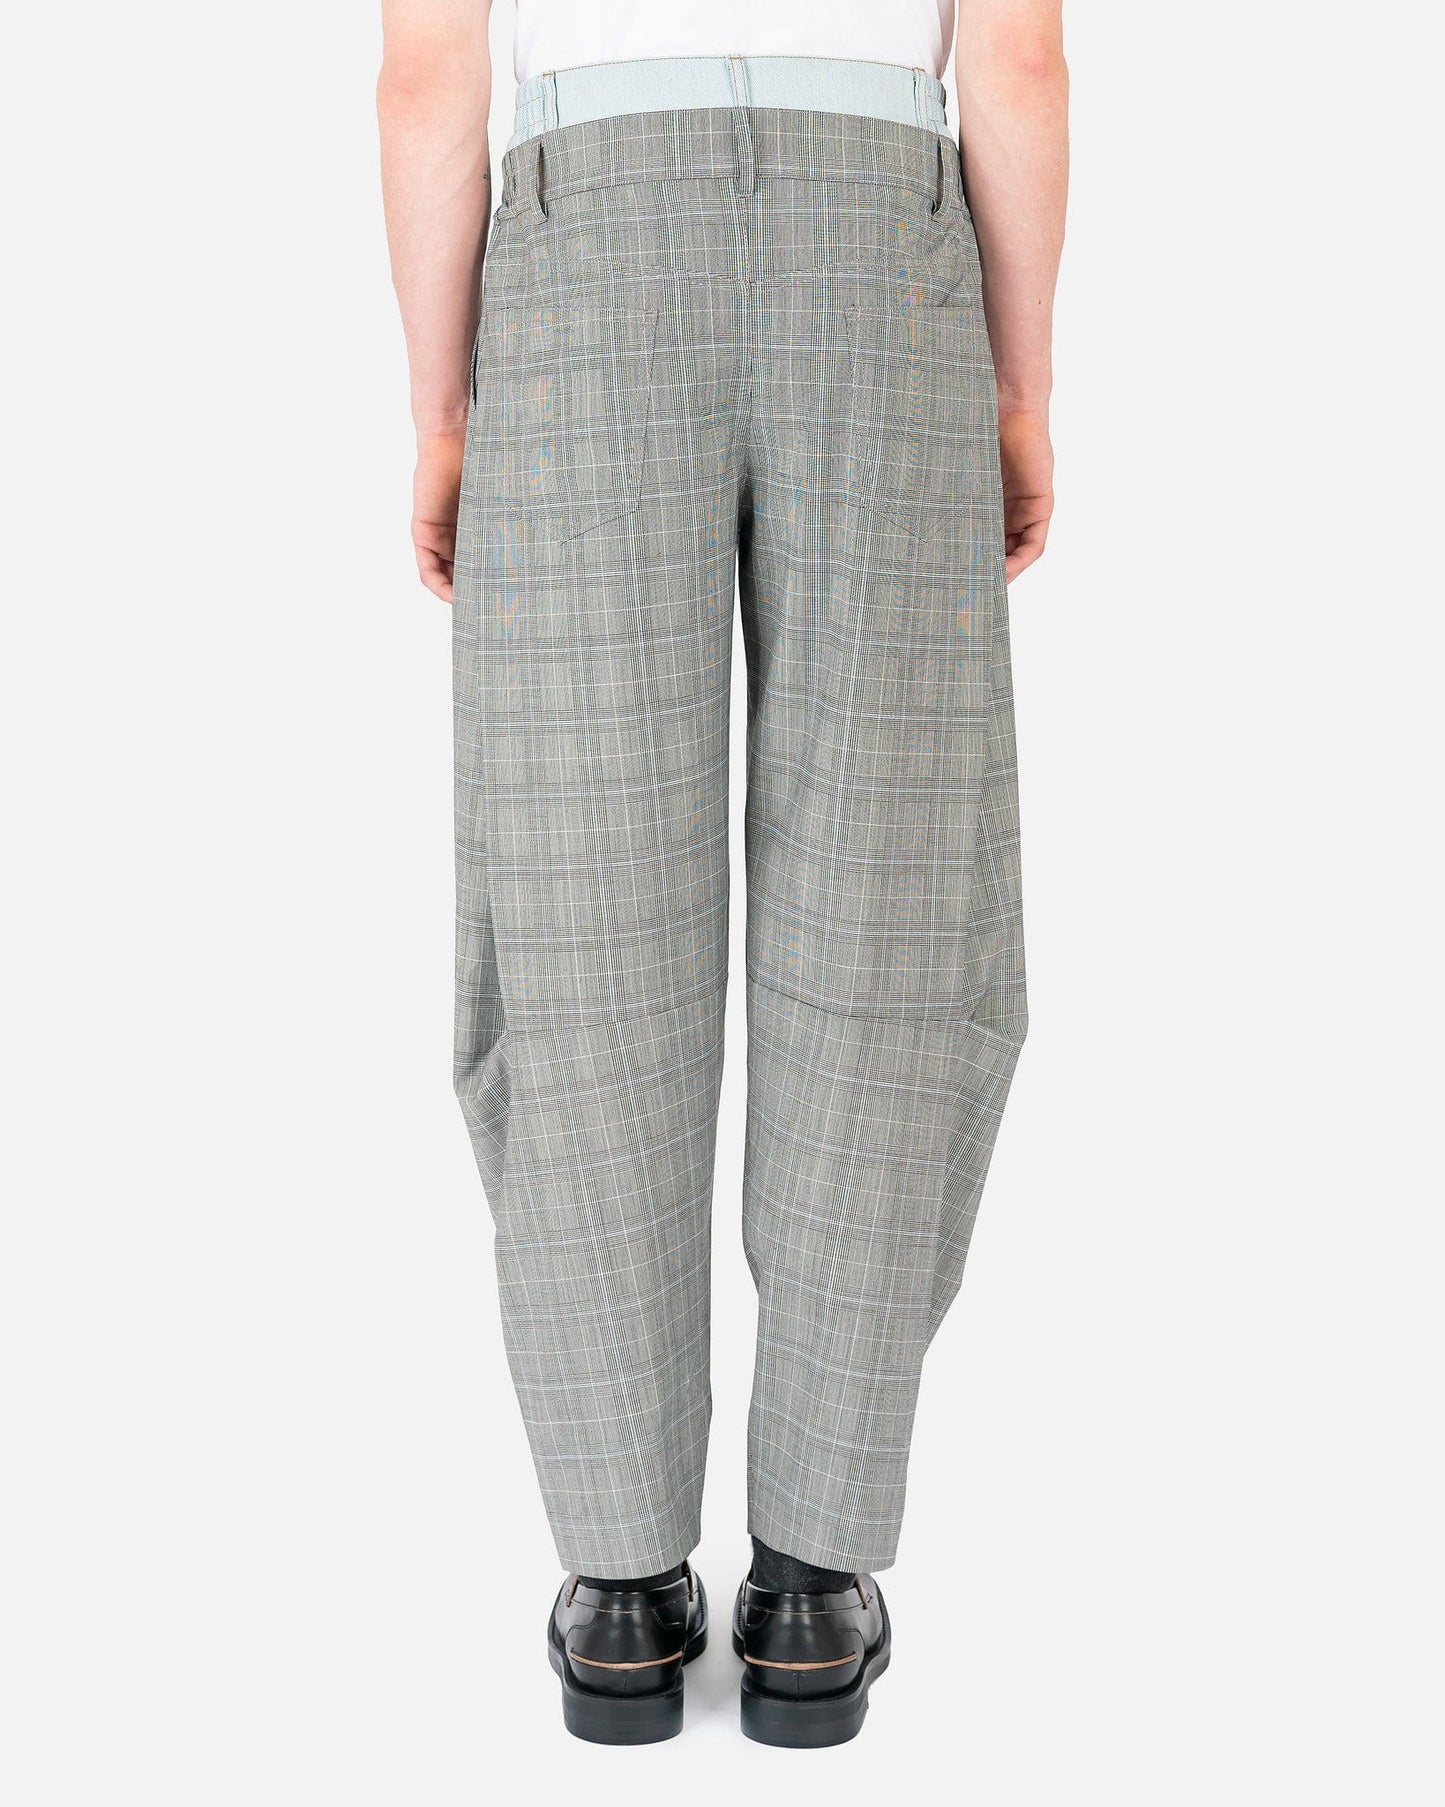 Feng Chen Wang Men's Pants Double Waistband in Grey Check